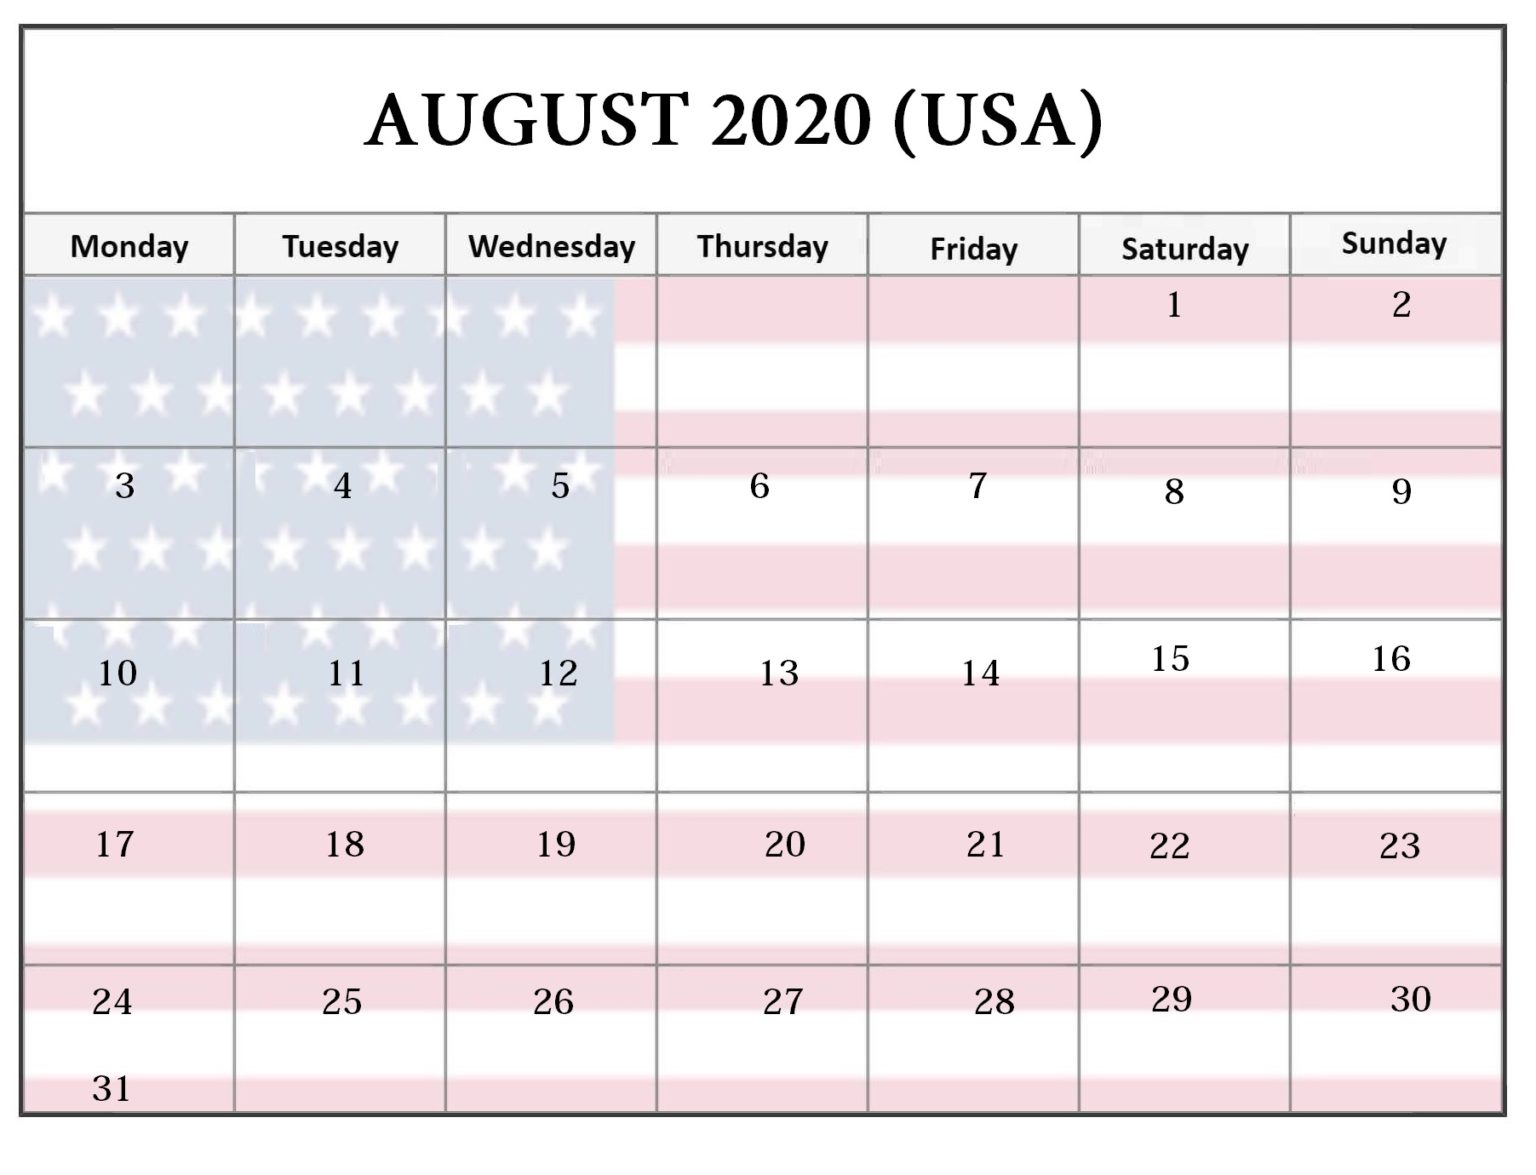 US August 2020 Bank Holidays Calendar